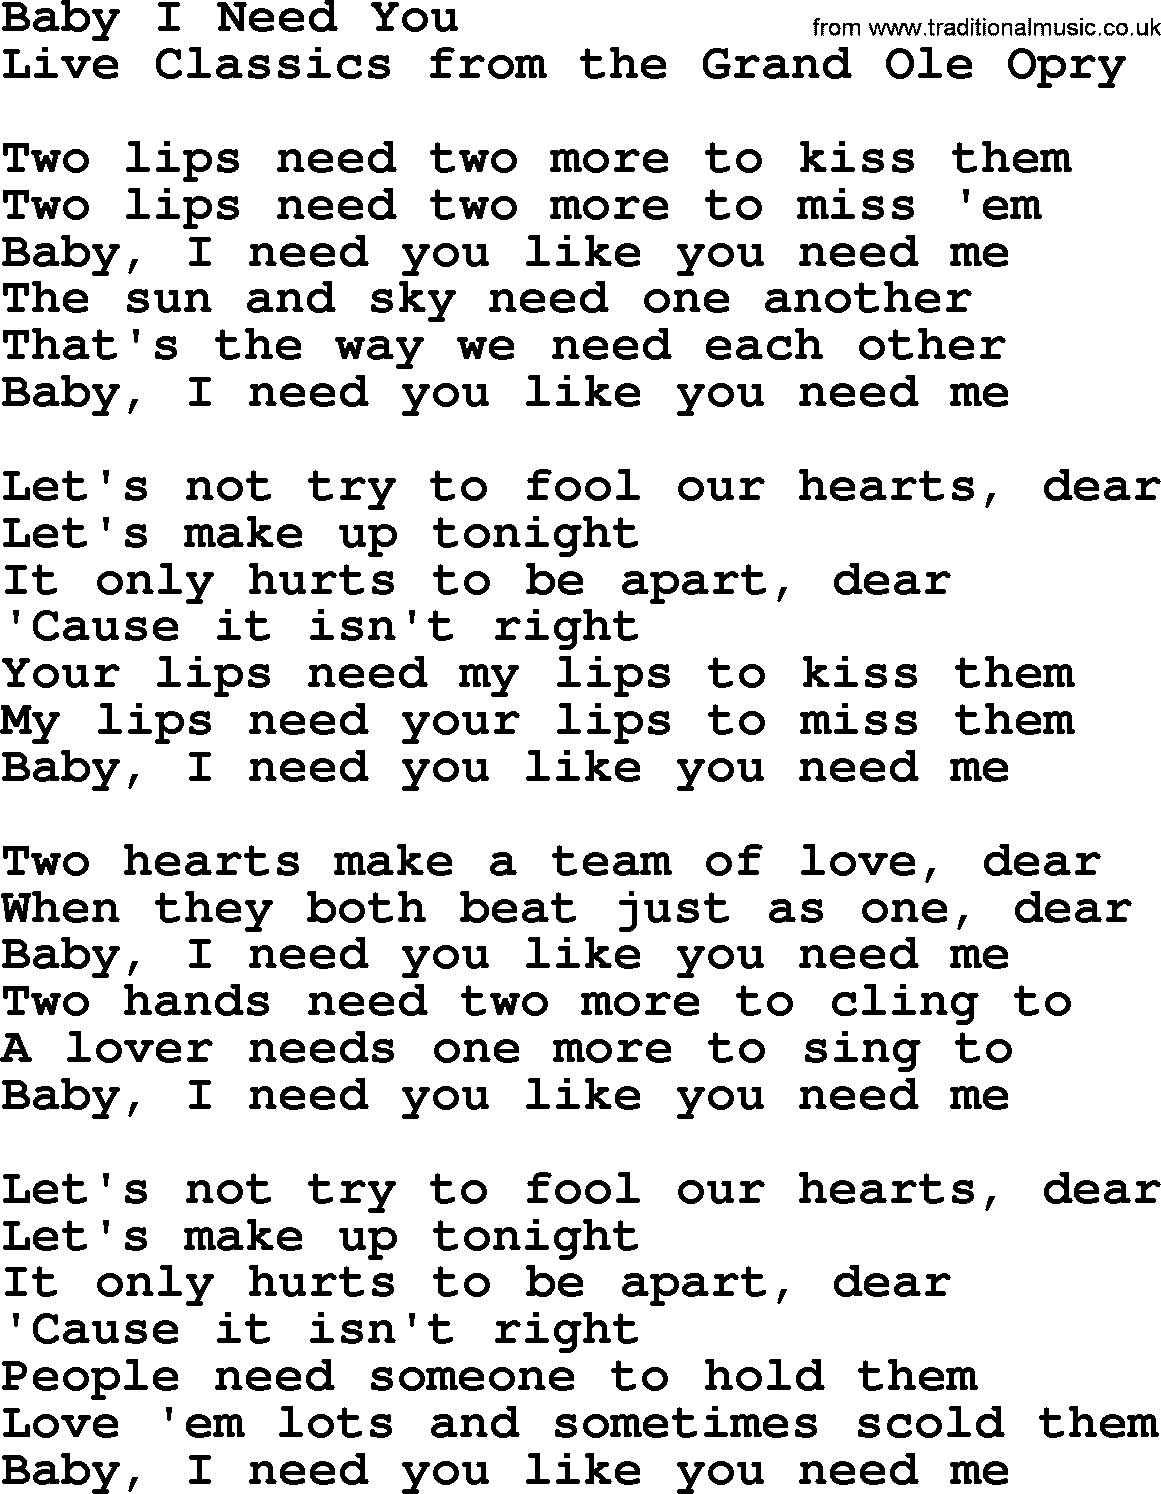 Marty Robbins song: Baby I Need You, lyrics